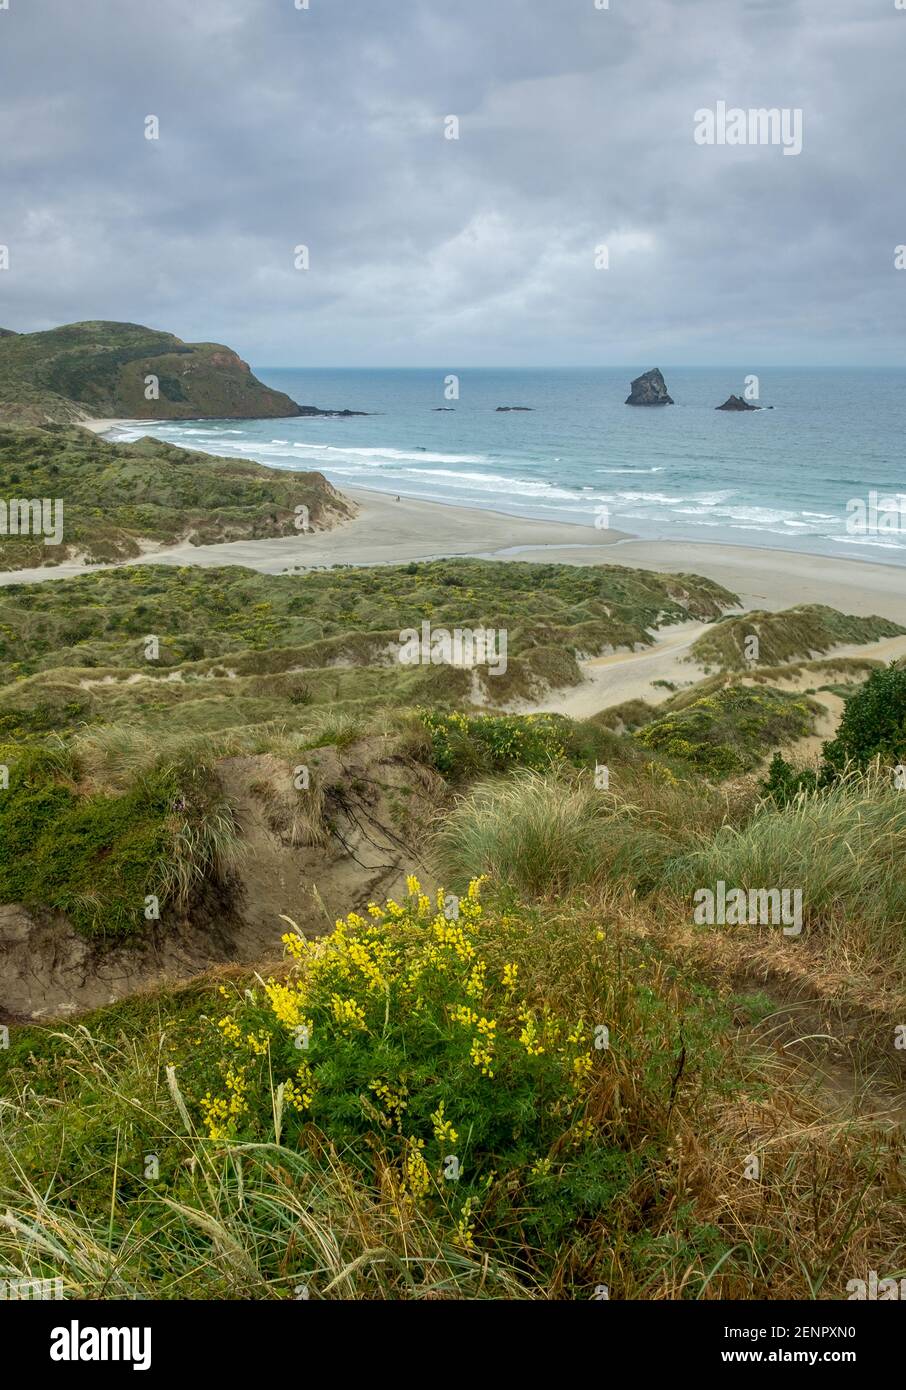 New Zealand's Otago Peninsula. Sanfly beach and Pacific Coast. Stock Photo